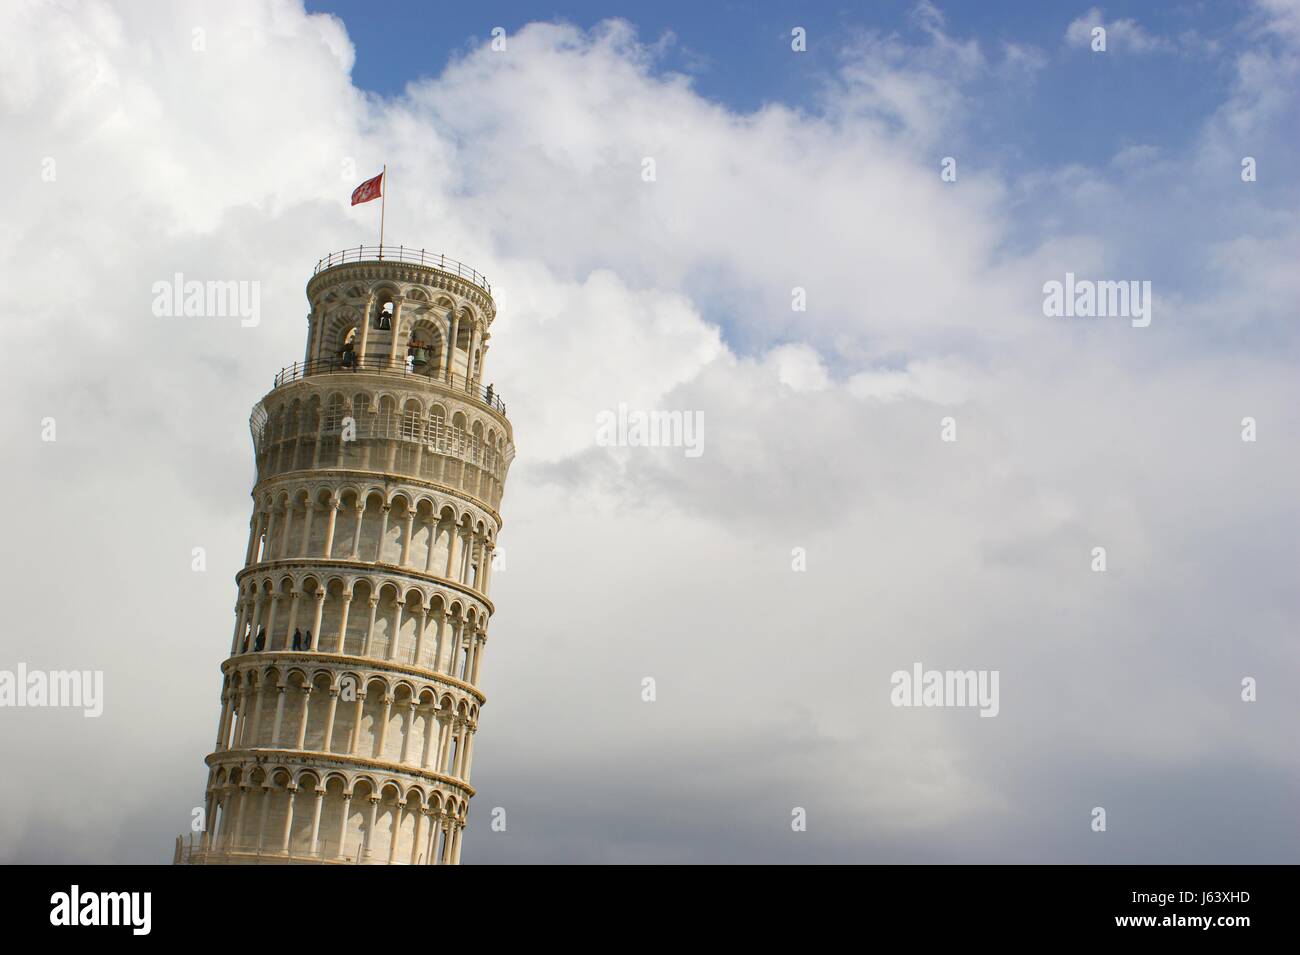 Turm skew Pisa Firmament Himmel Italien Wolken Turm Denkmal Tourismus Wolke Stockfoto